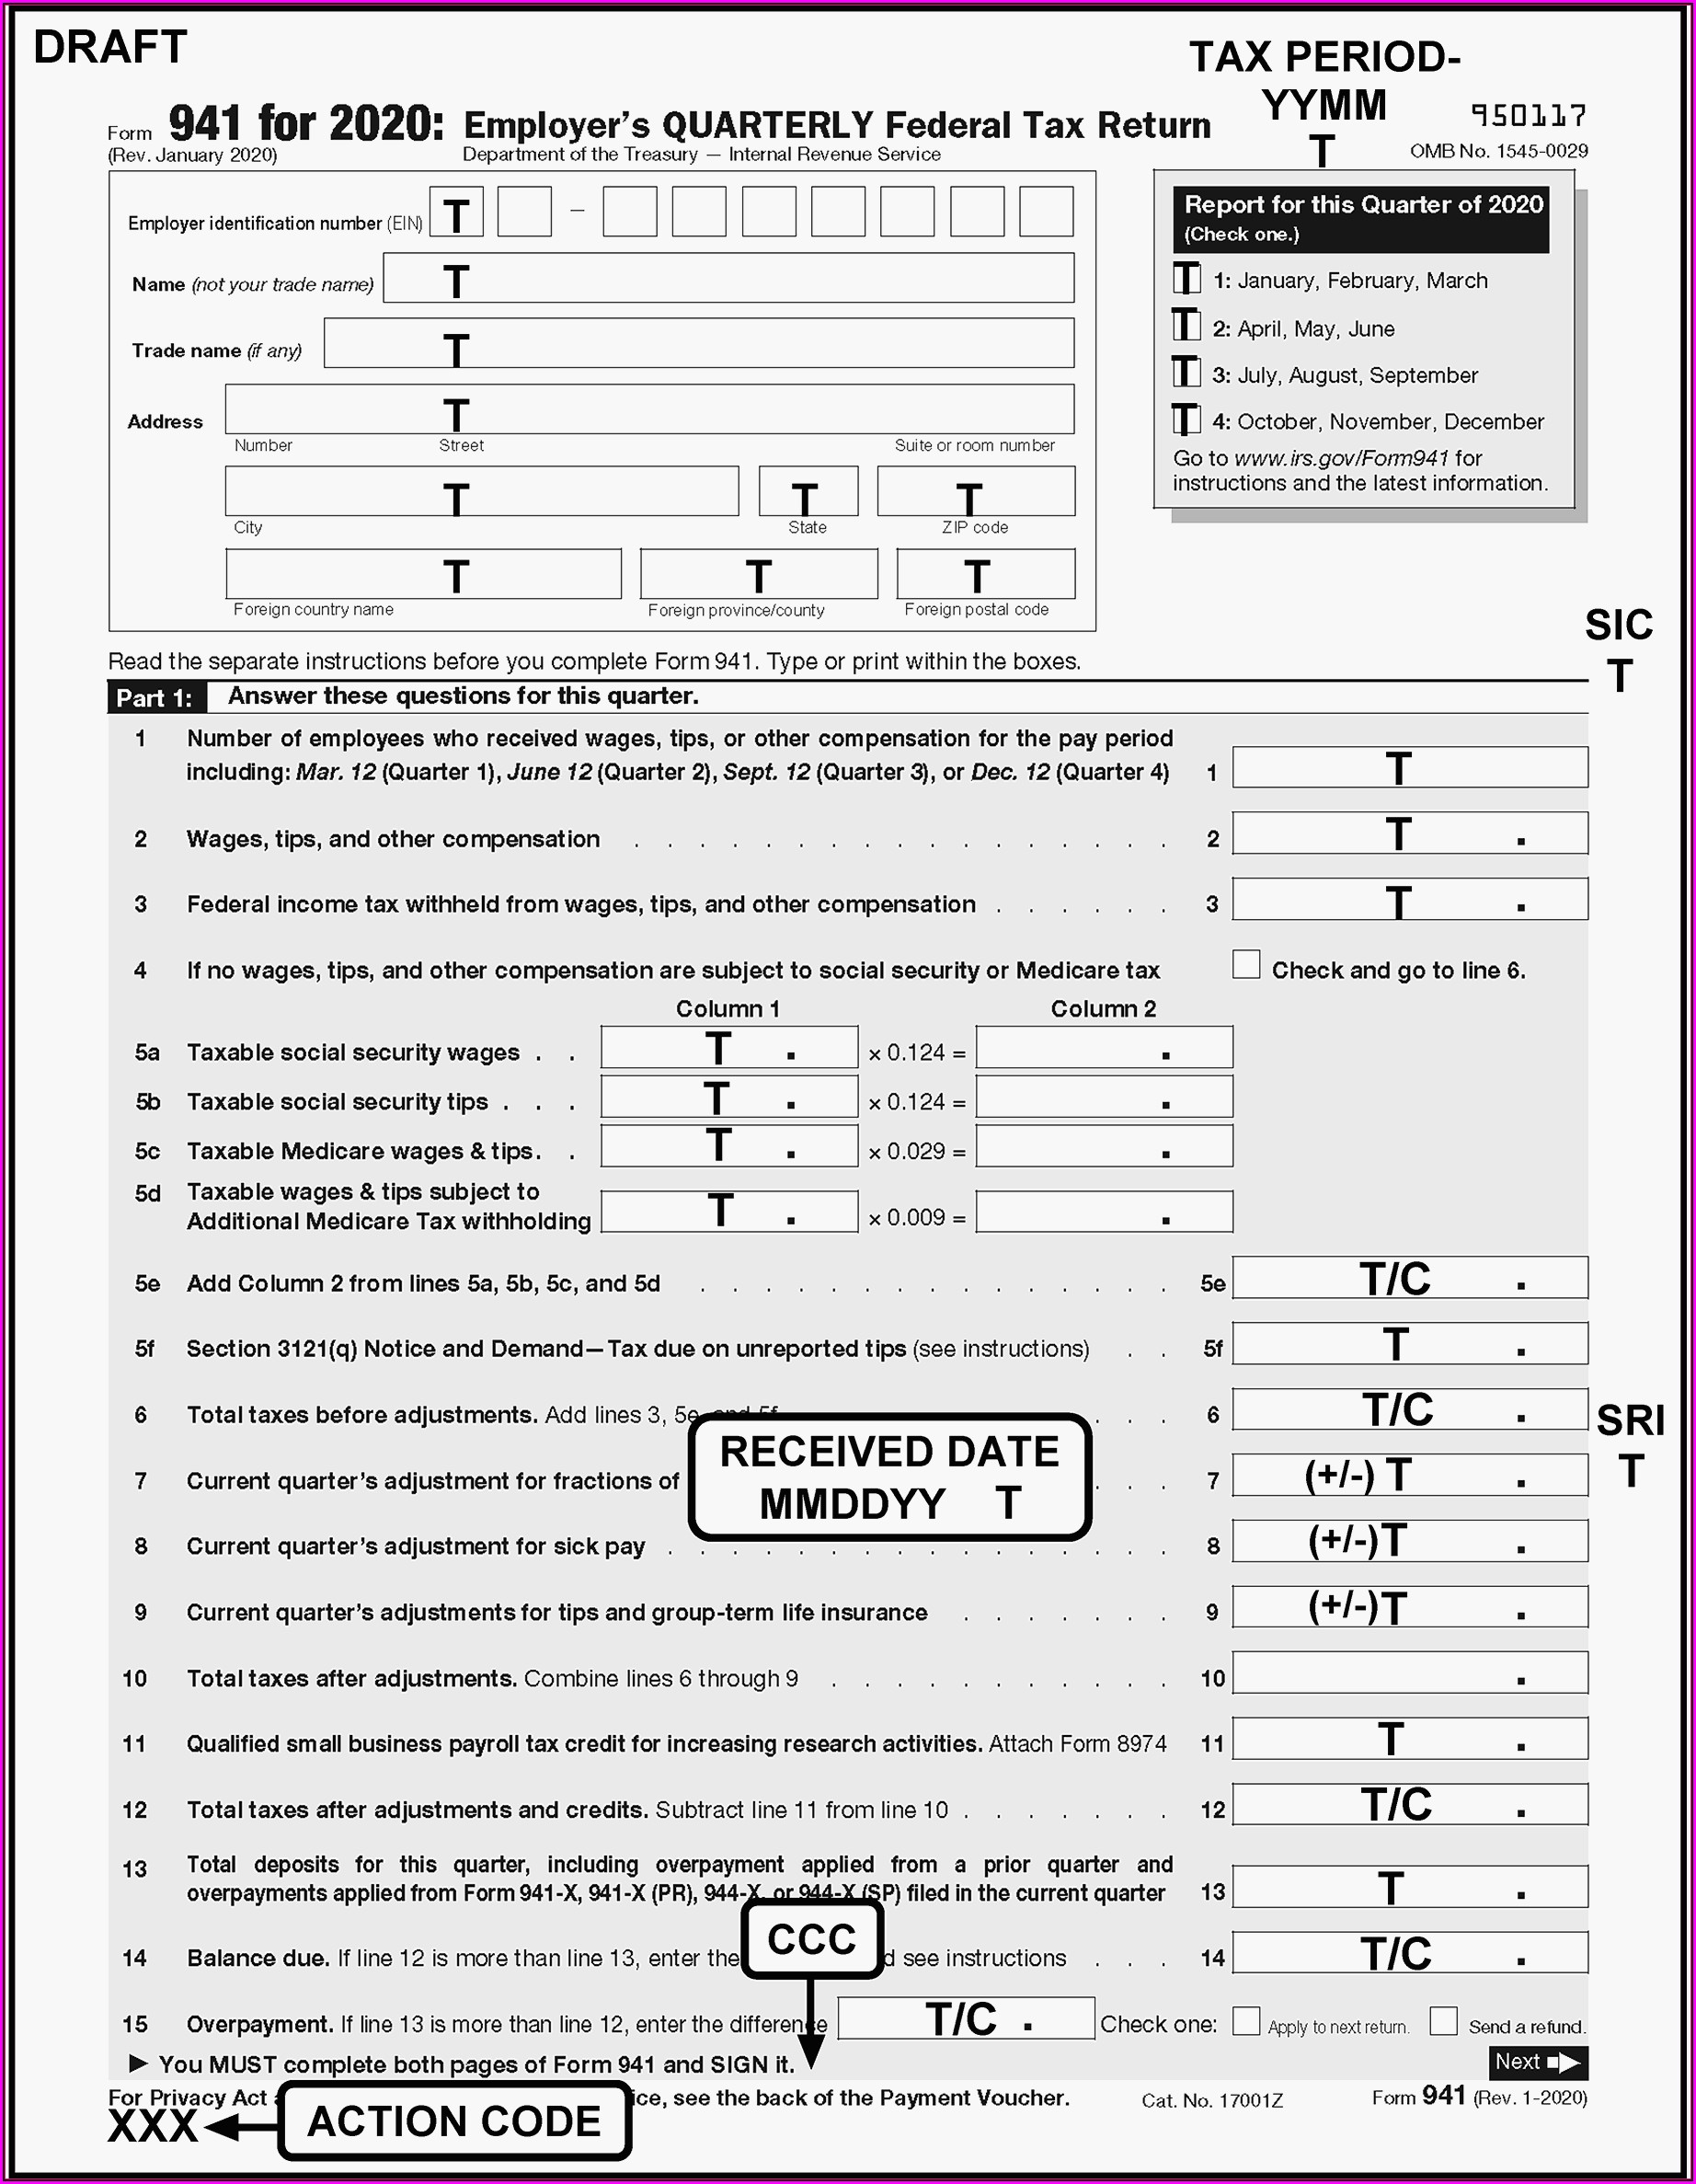 Irs.gov Form 941 X Instructions